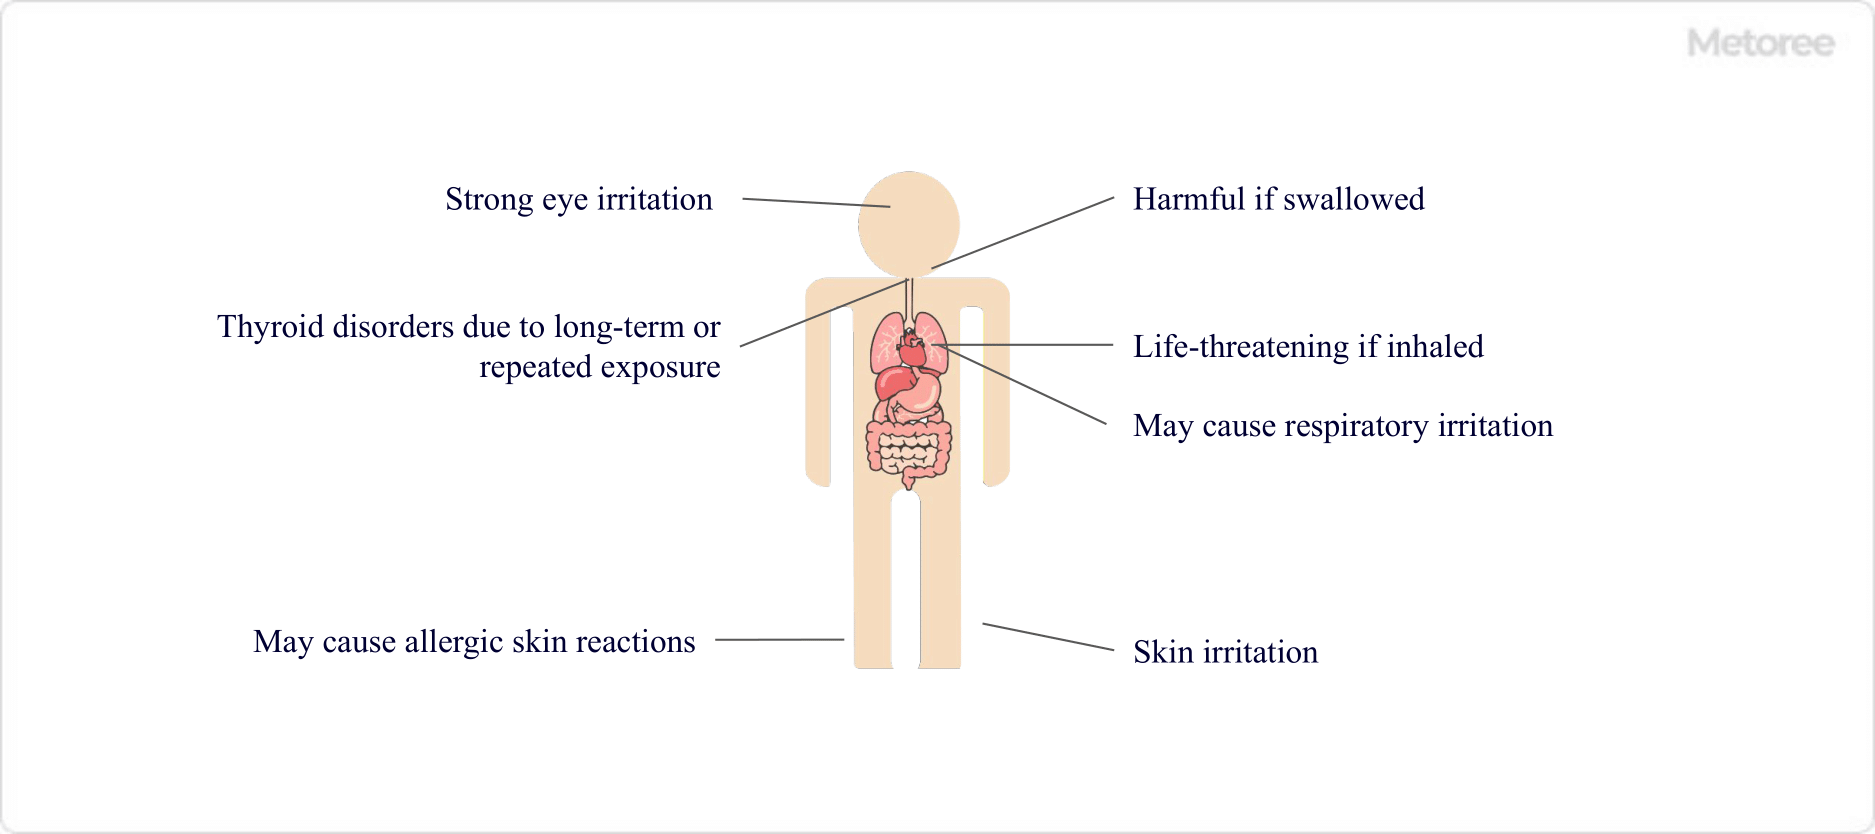 Figure 3. Toxicity of Iodine